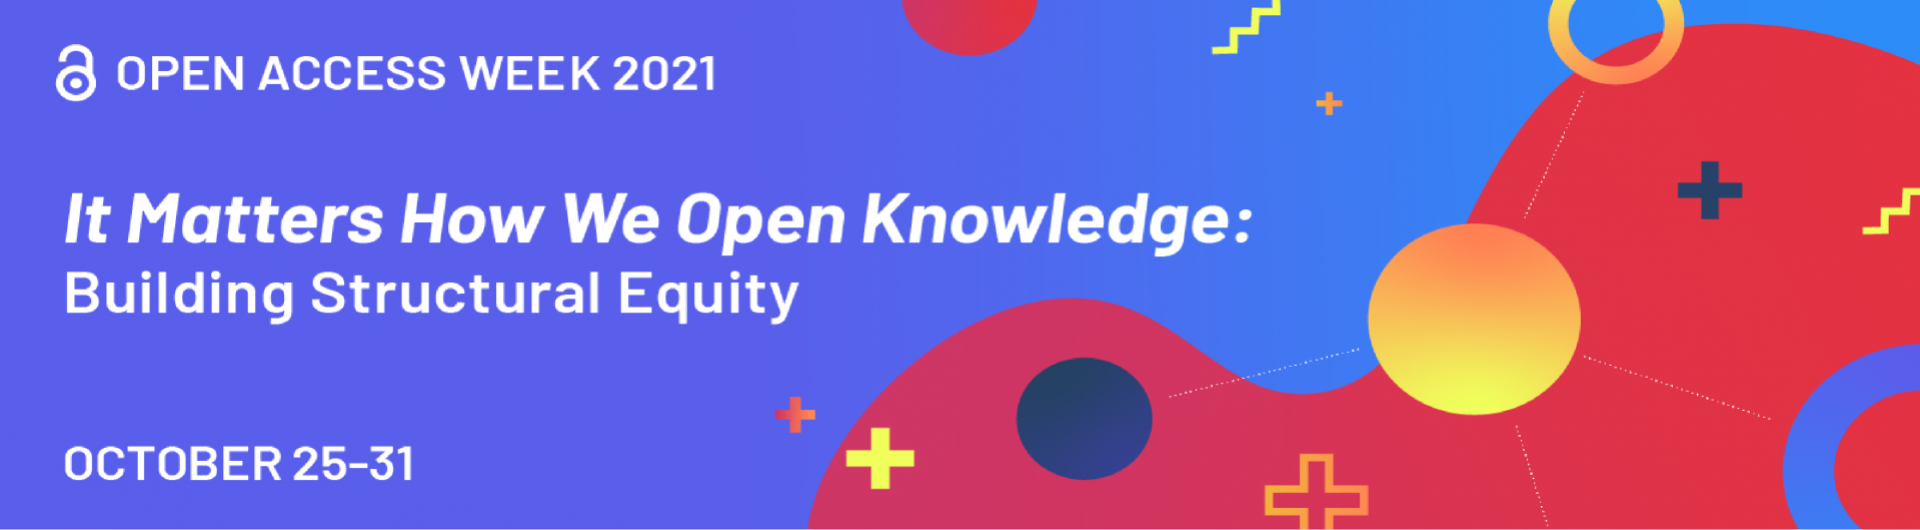 Open Access Week 2021 theme: it matters how we open knowledge